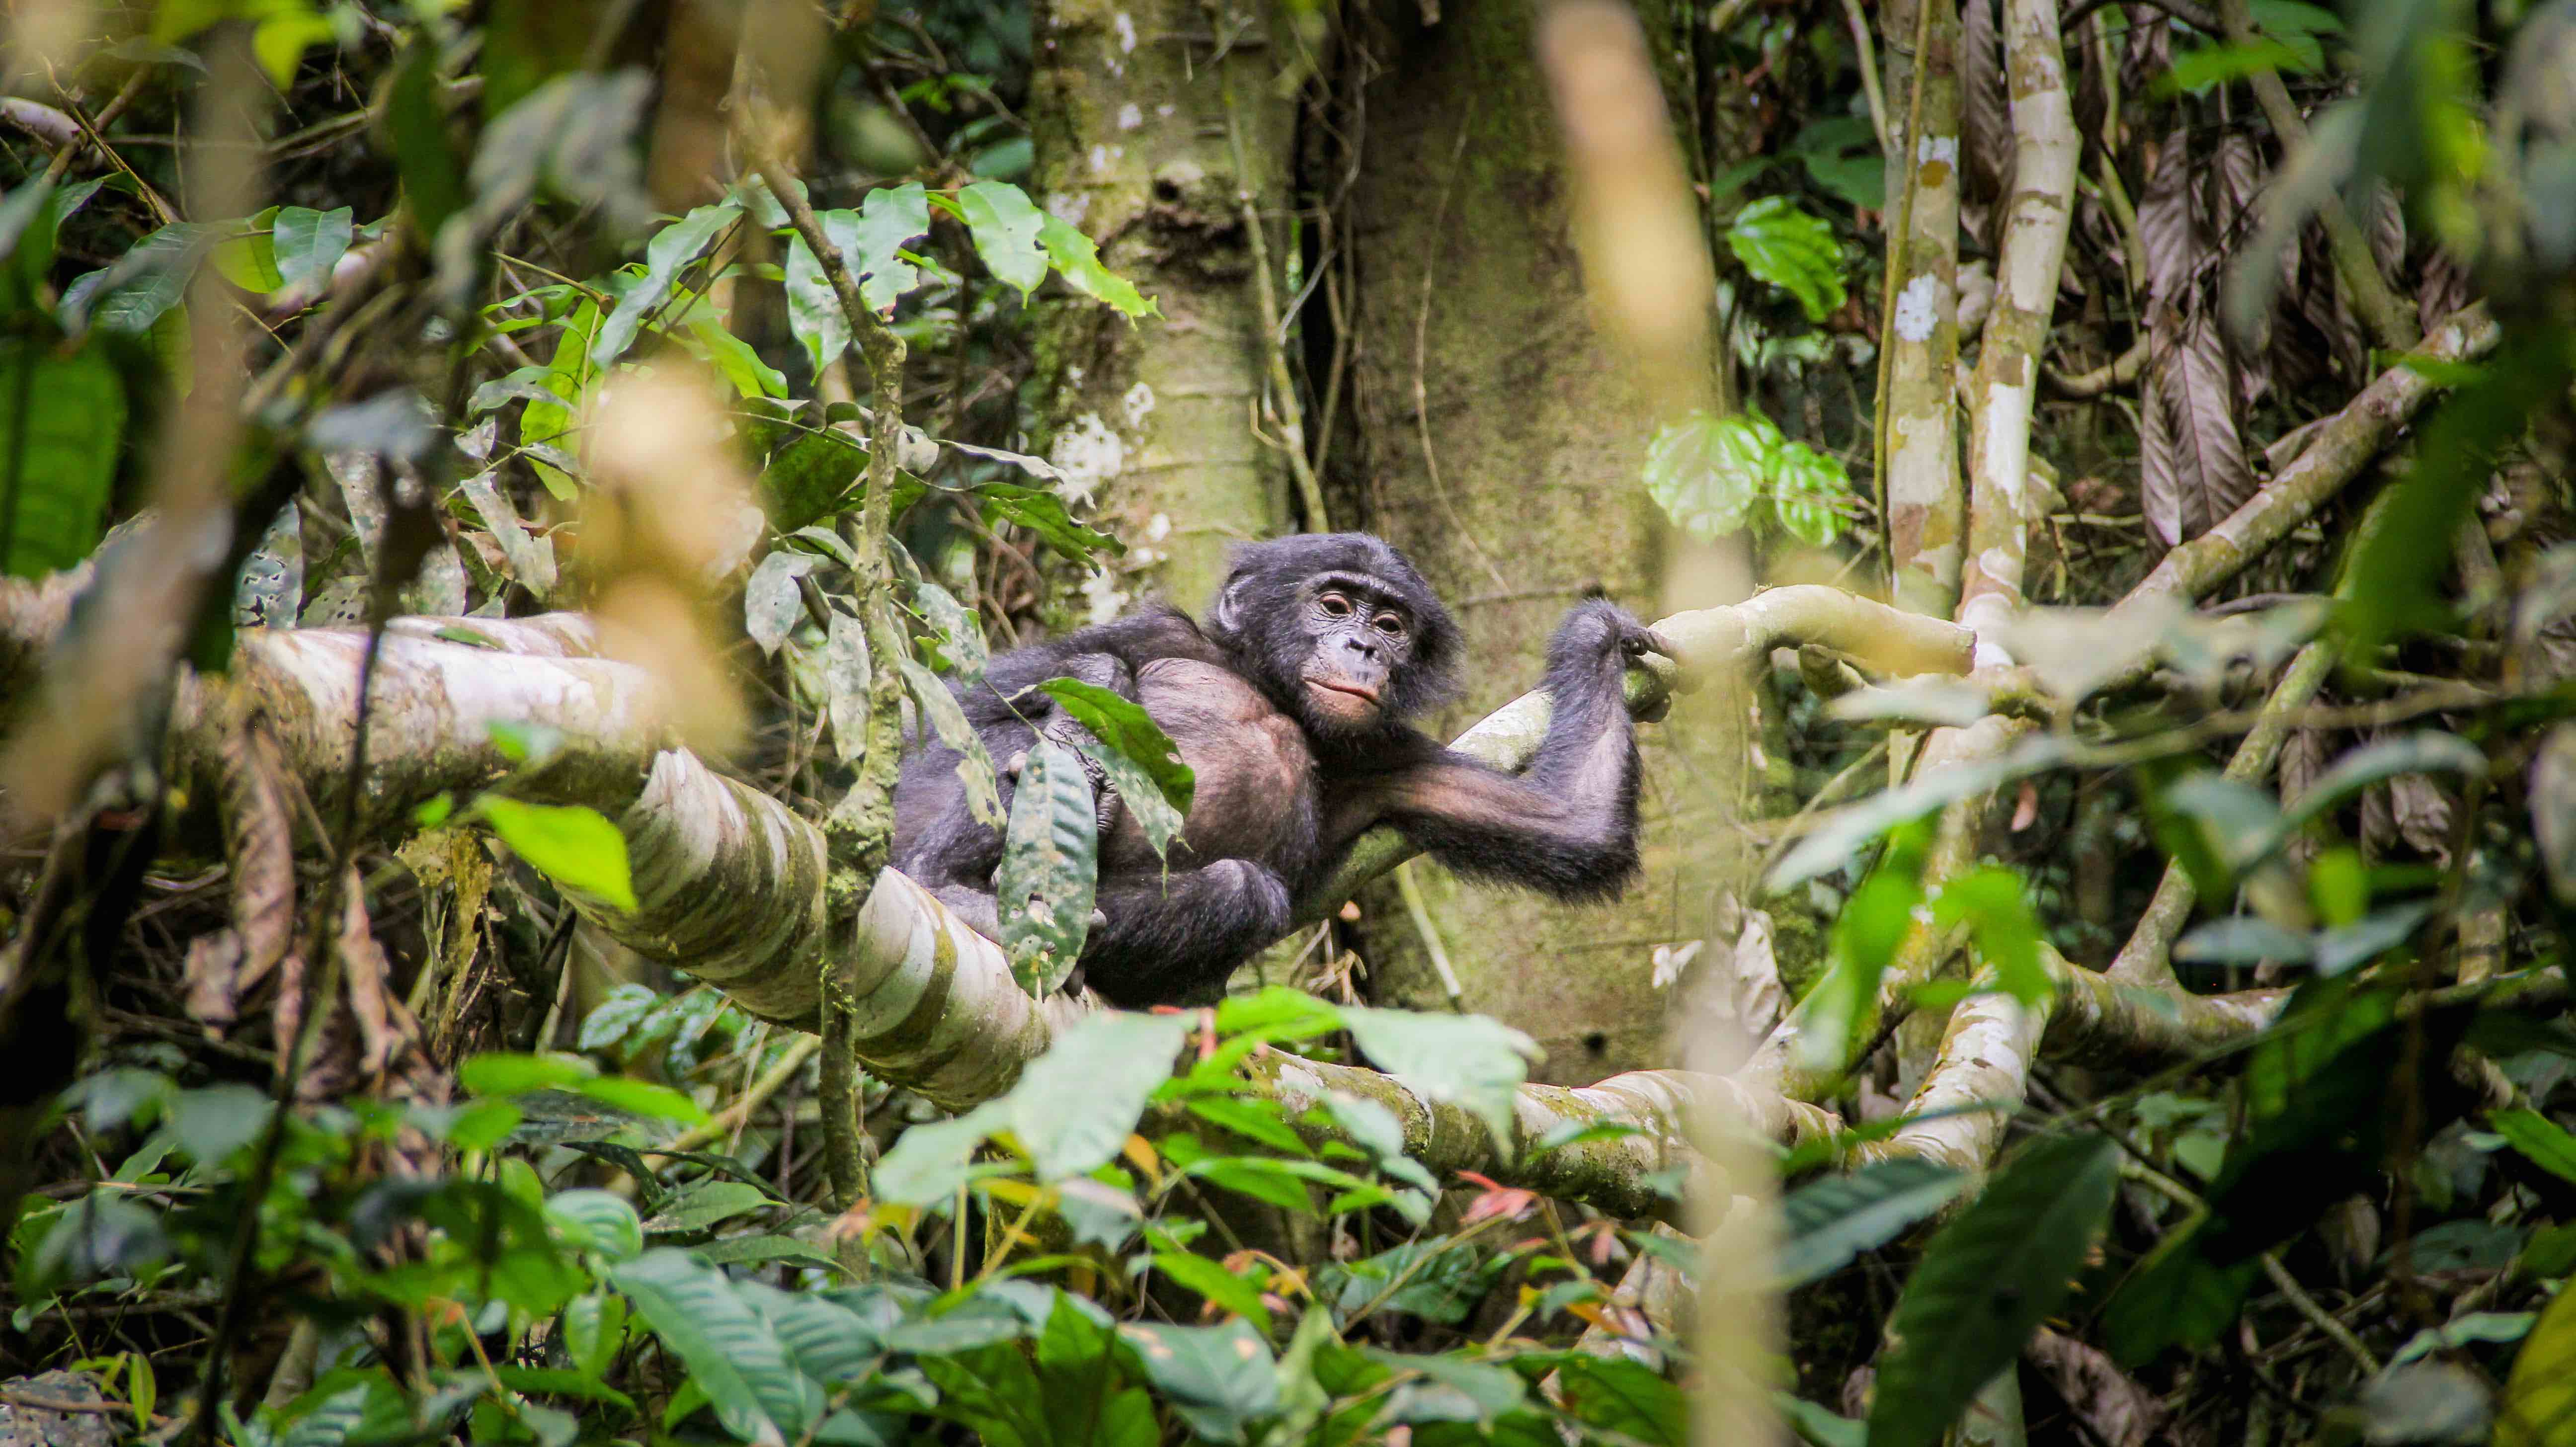 Image taken in the wild at Wamba forest reserve, DRC. Credit: Dr. Cintia Garai, Wildlife Messengers (wildlifemessengers.org) 